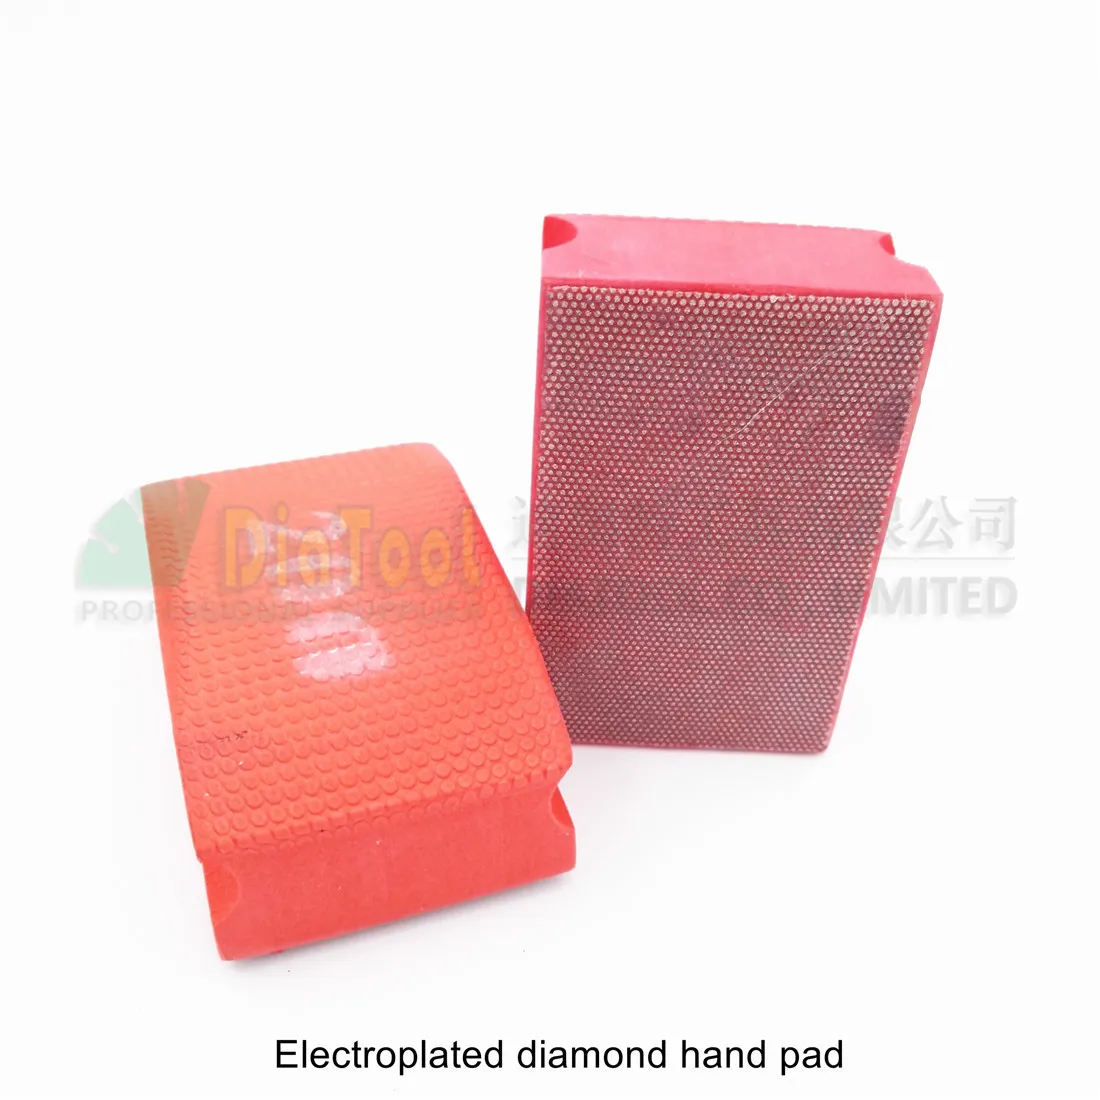 DIATOOL 2pcs Dotted electroplated diamond hand polishing pad 90X55MM #200 Hard Foam-backed Hand pad